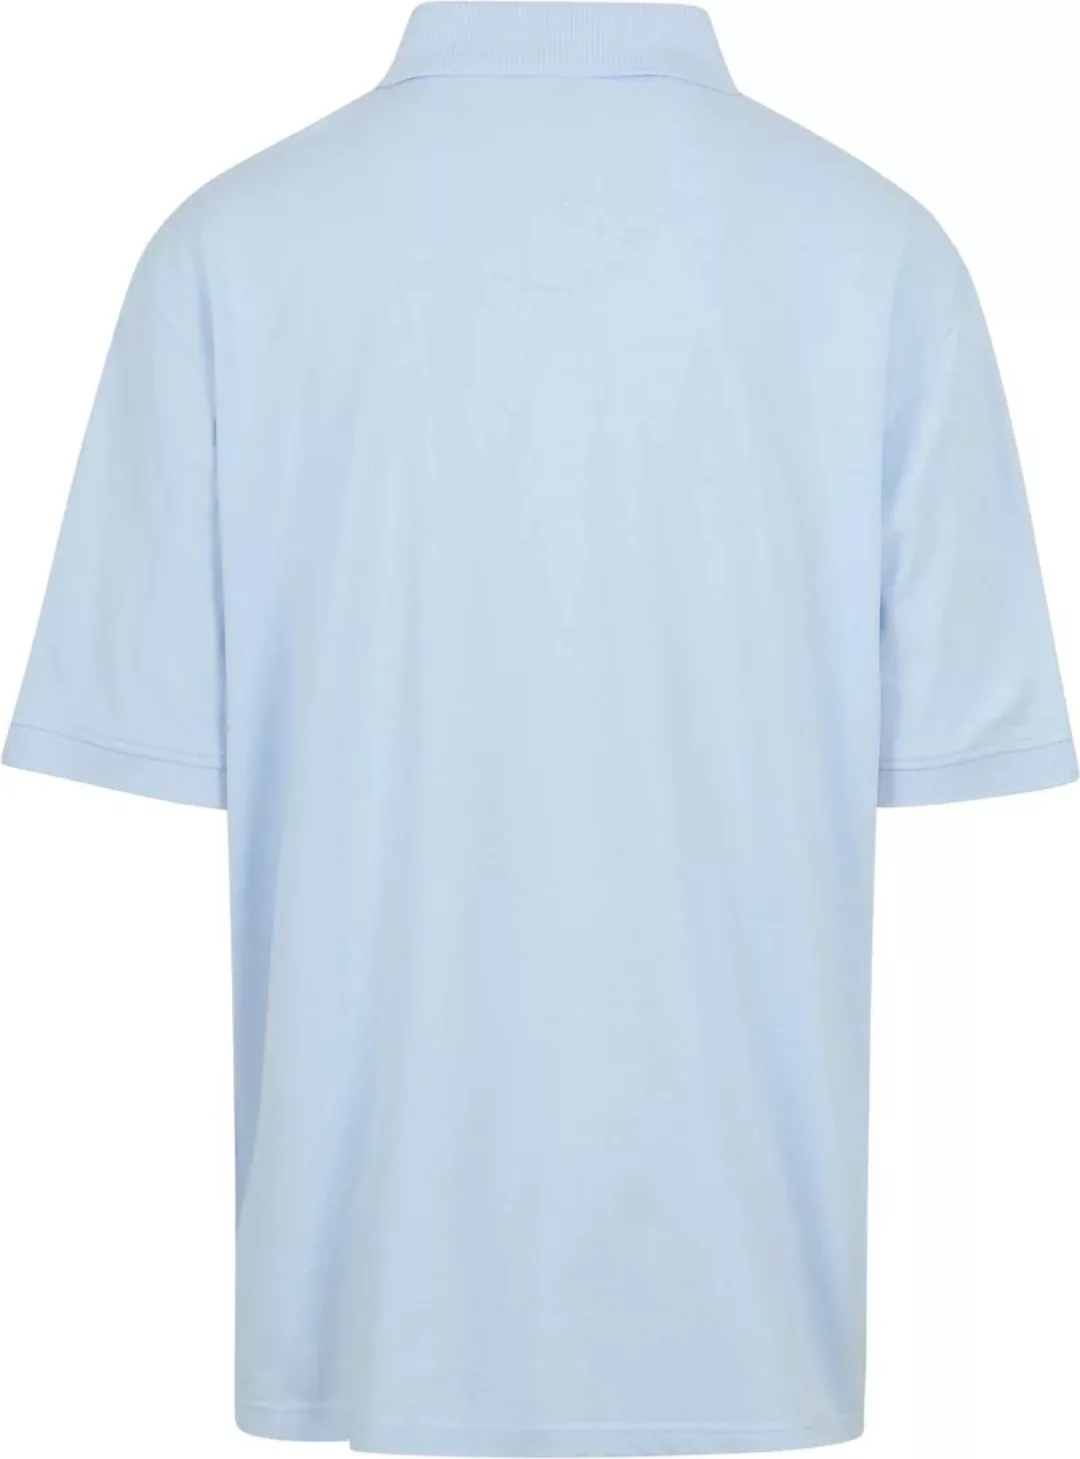 Tommy Hilfiger Big and Tall Poloshirt Hellblau - Größe 5XL günstig online kaufen